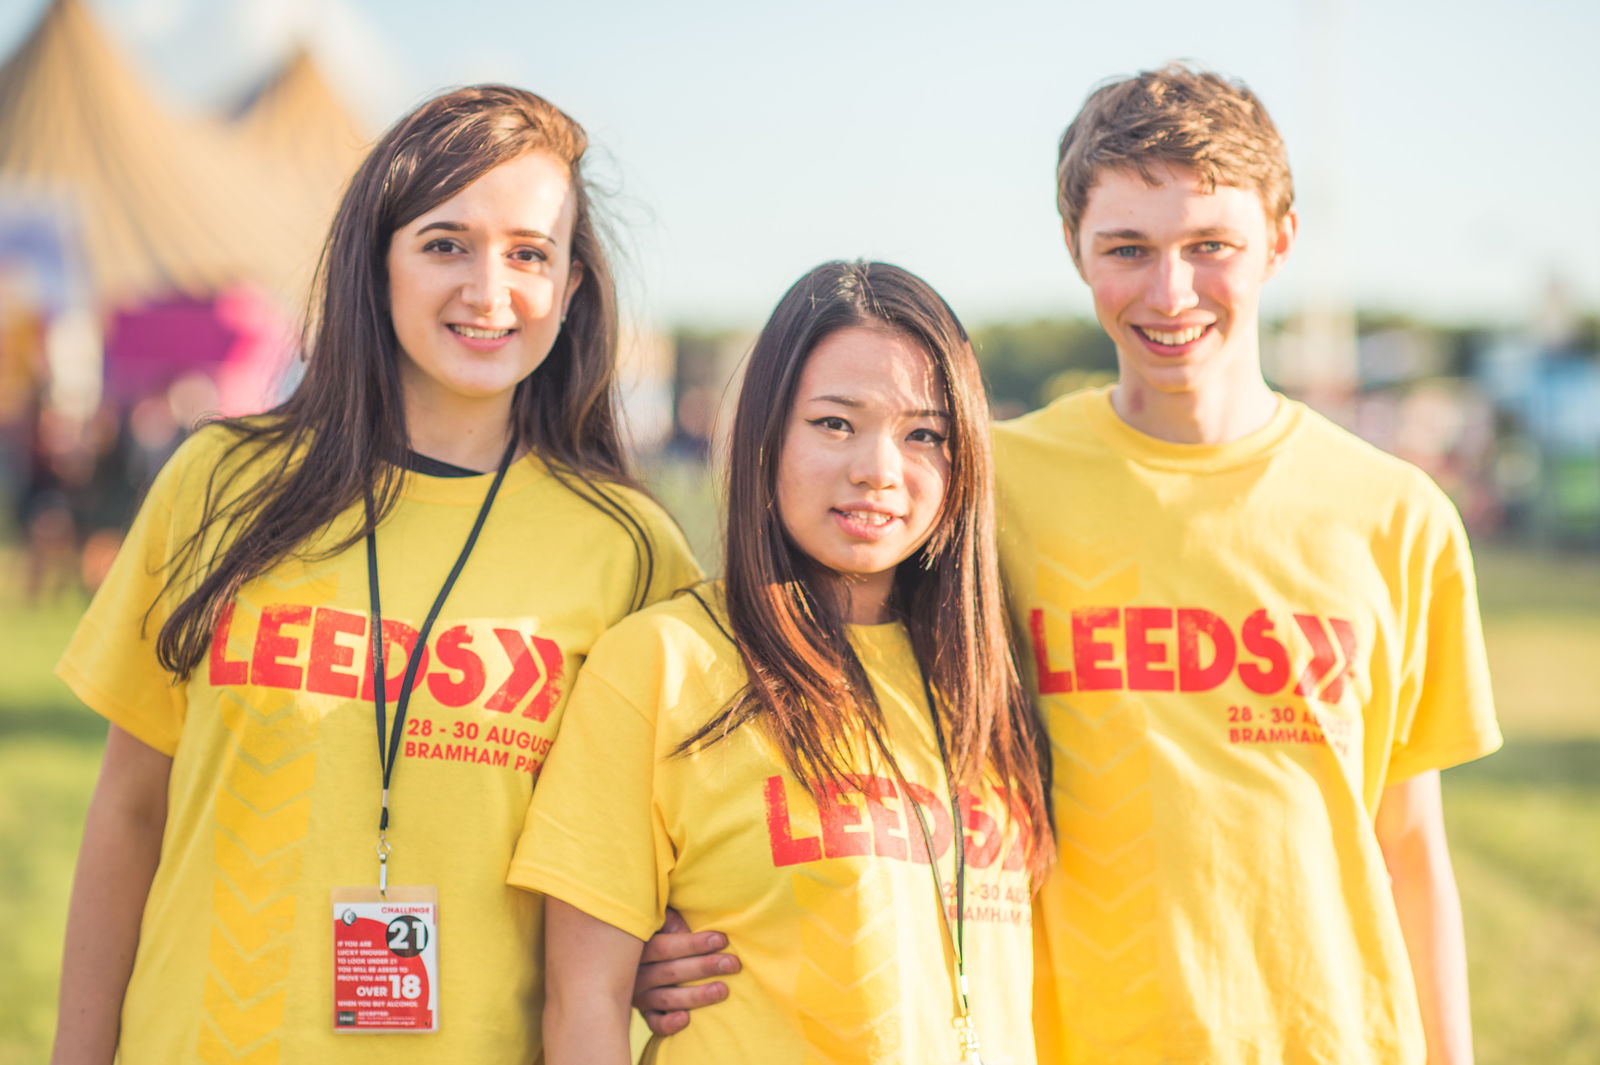 Leeds Festival 2015